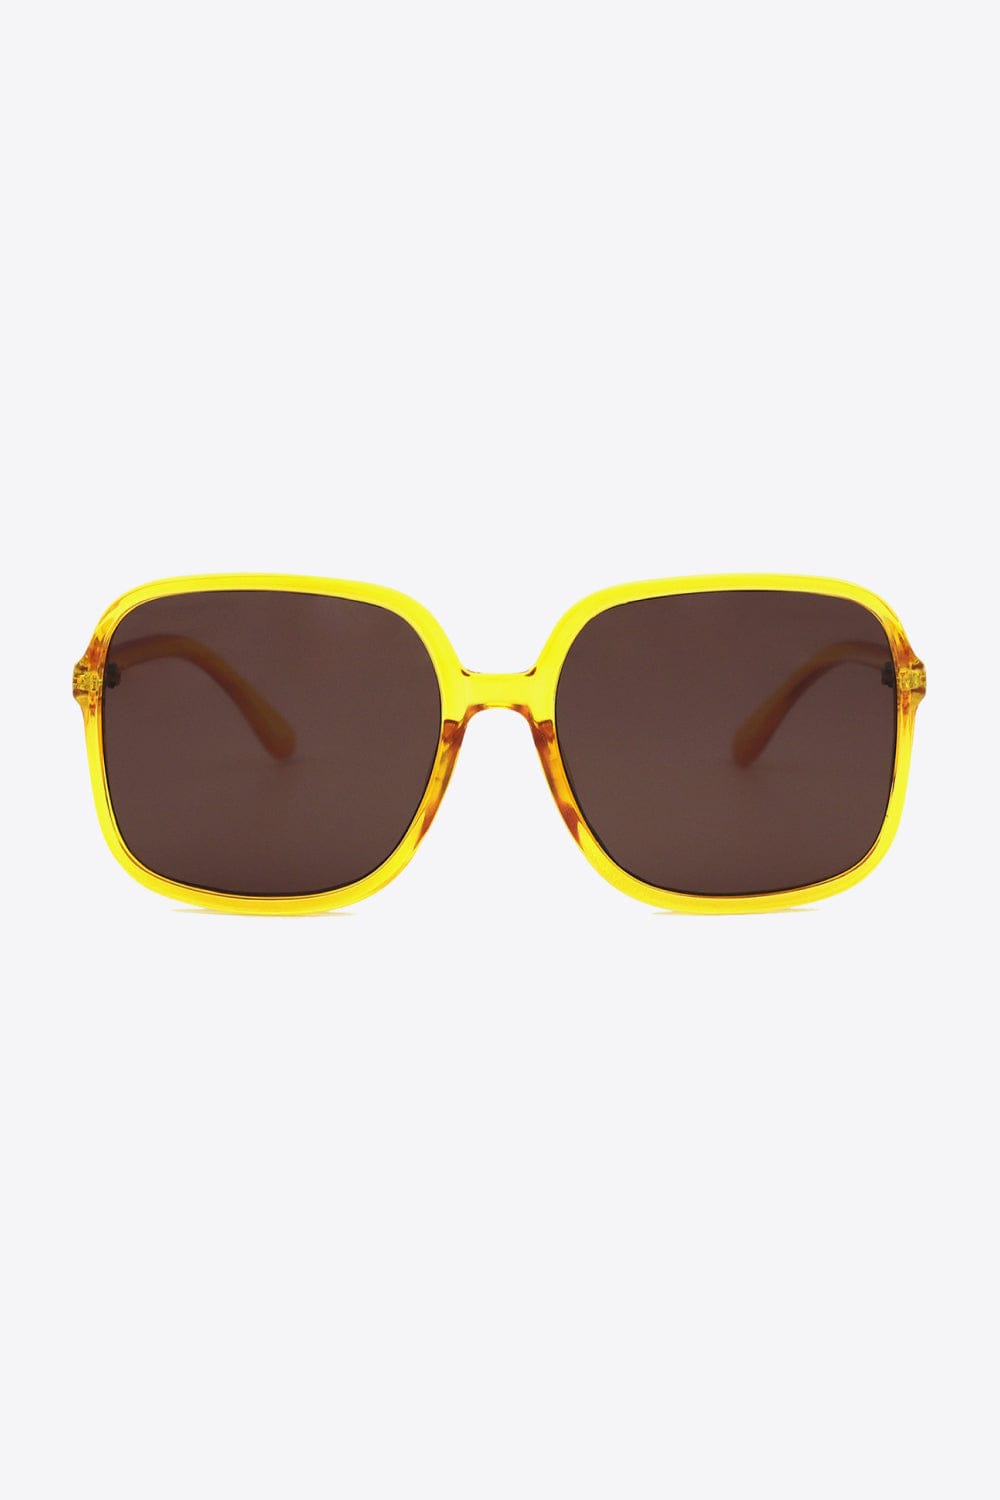 The802Gypsy sunglasses GYPSY-Polycarbonate Square Sunglasses